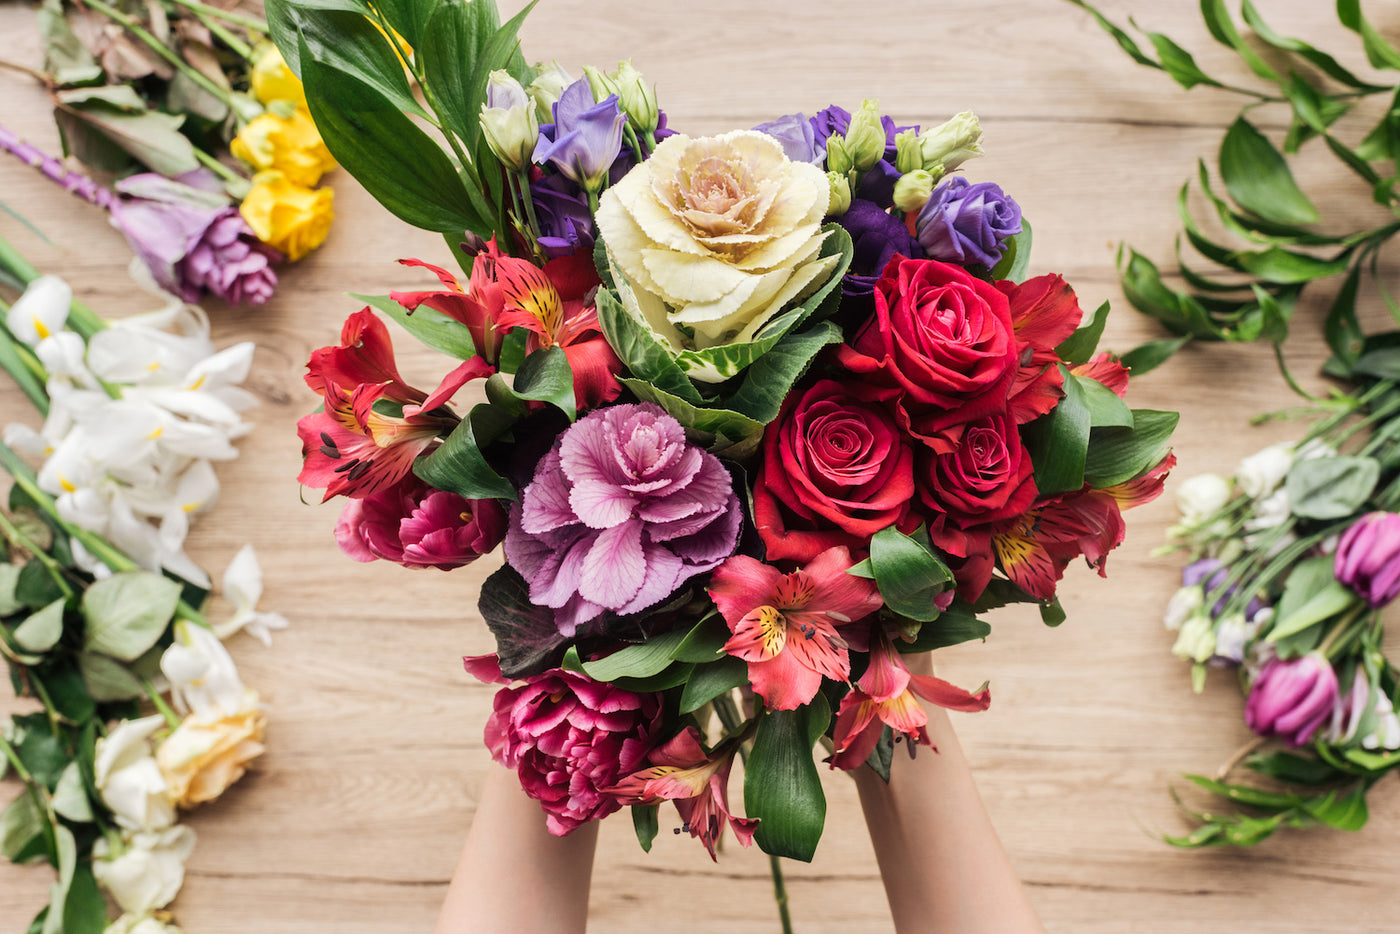 Choose a Beautiful Bouquet of Flowers